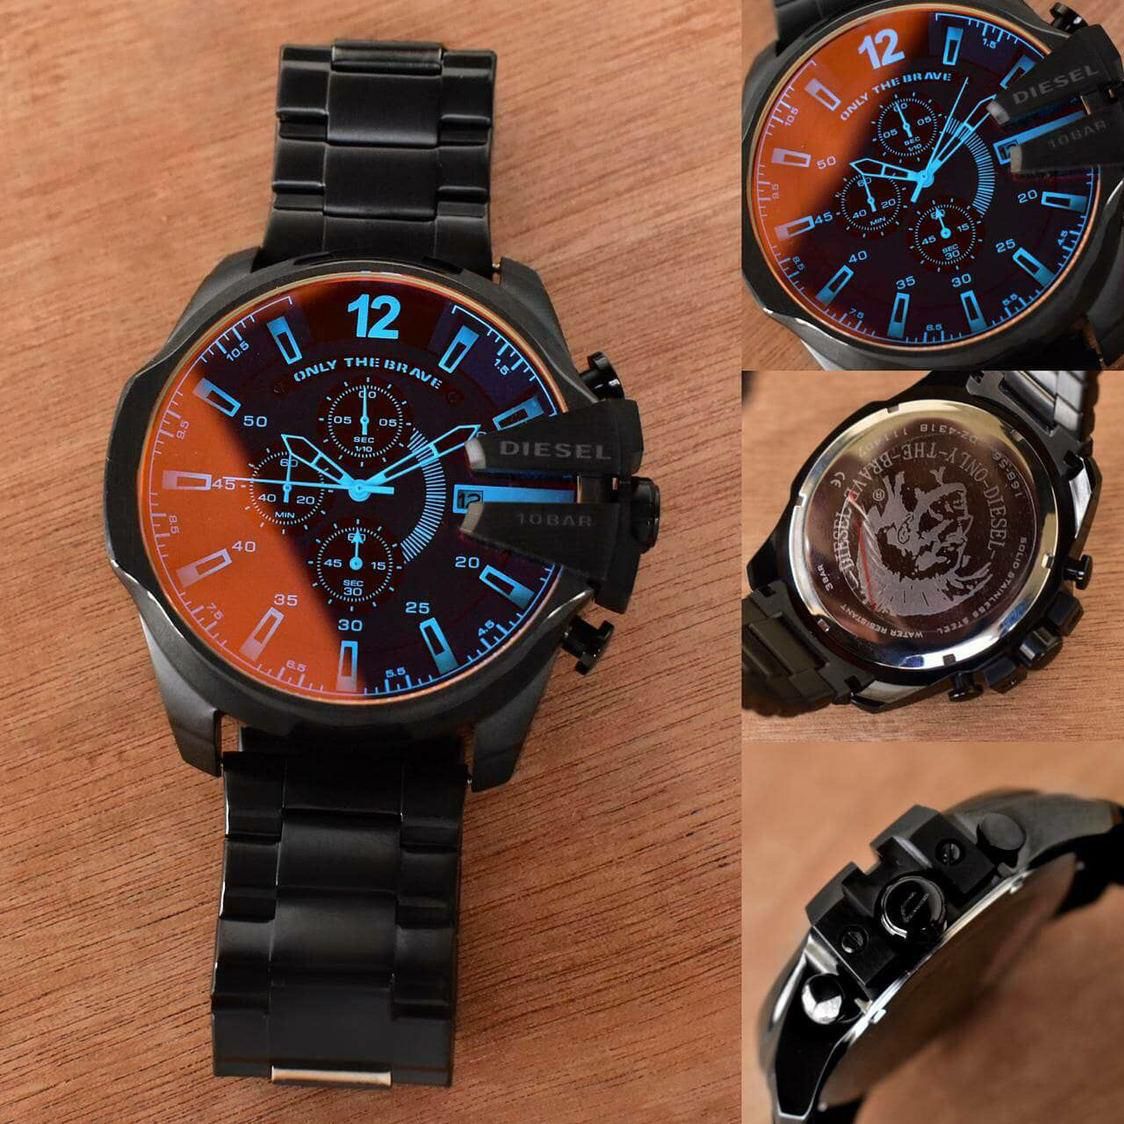 dynamic Megachief Collection watch - AmazingBaba